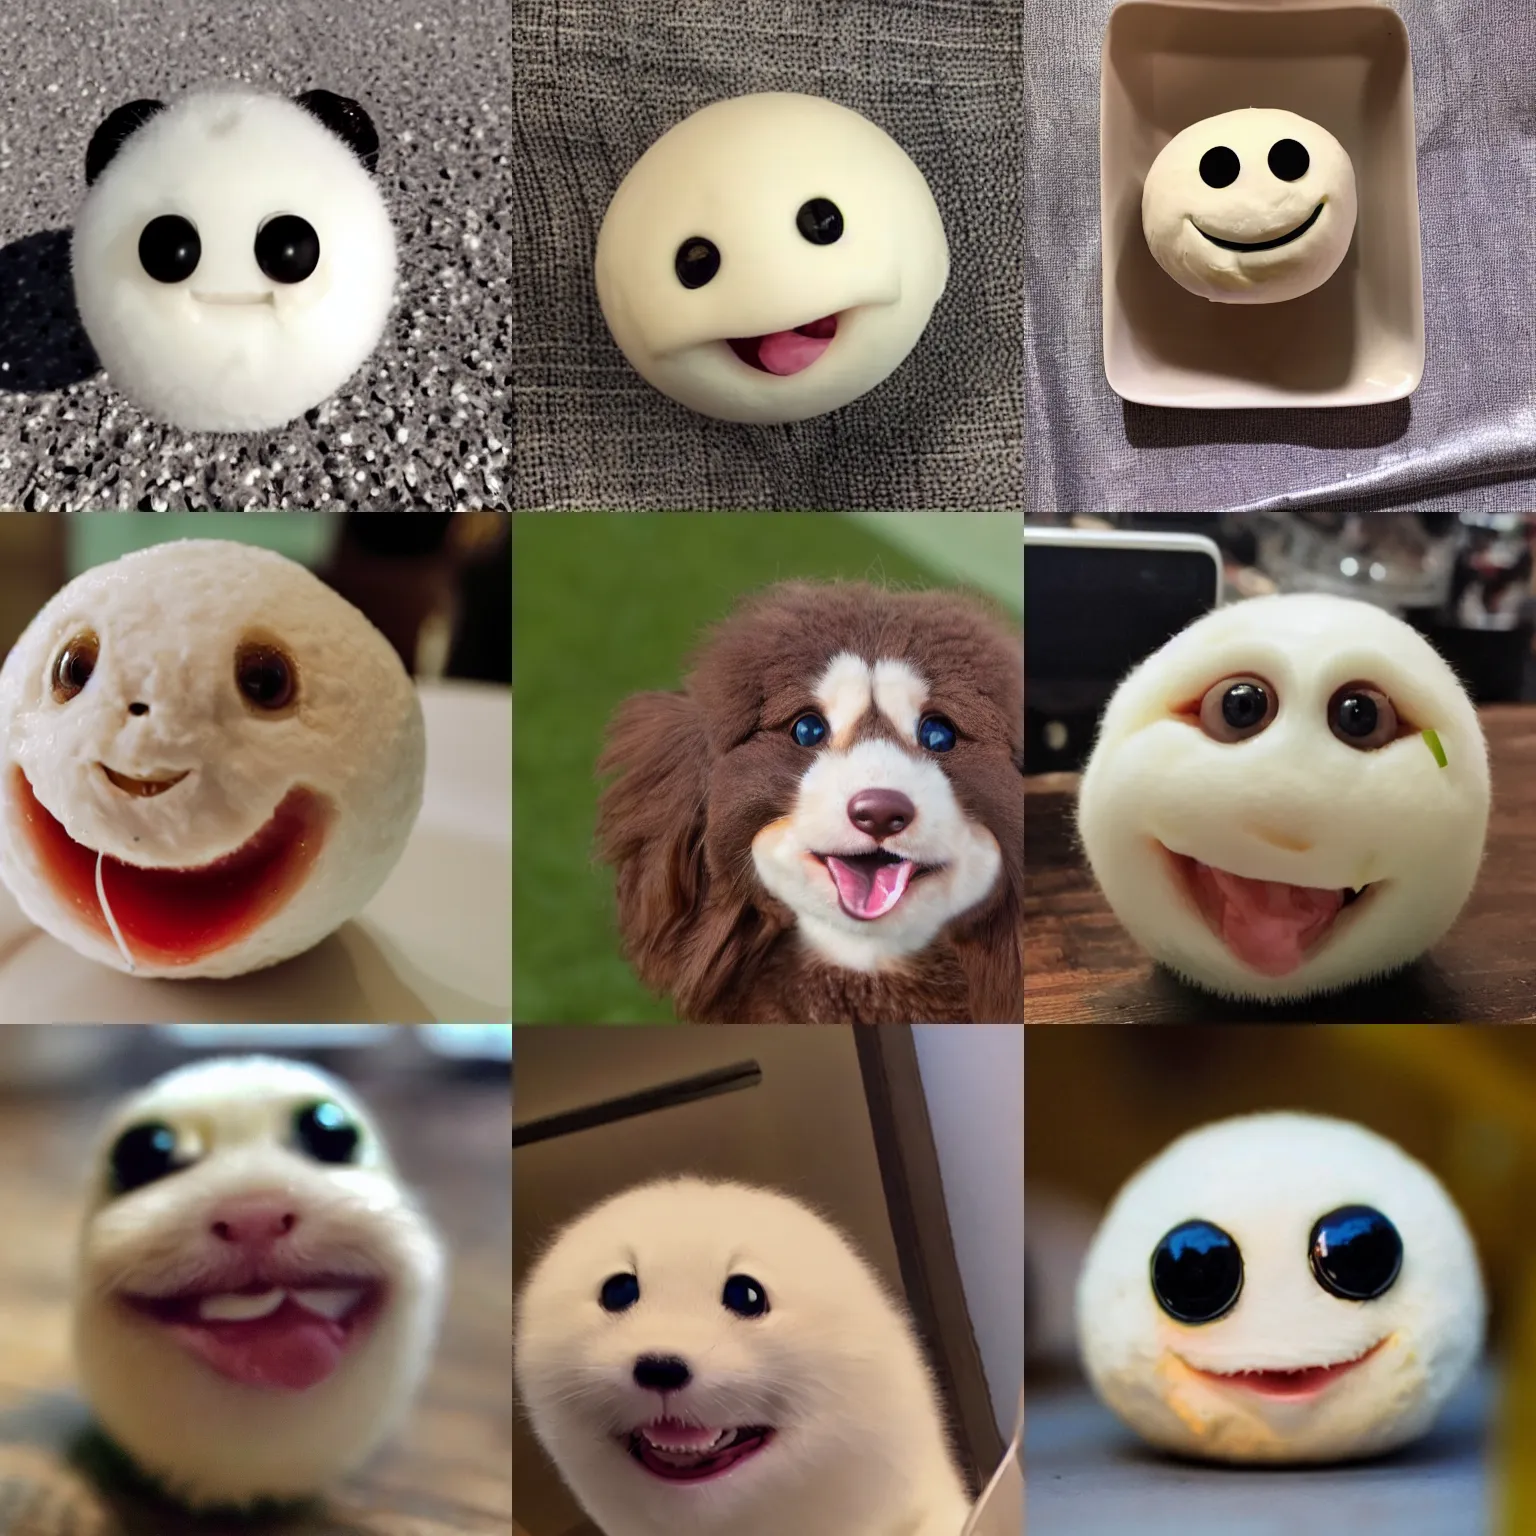 Prompt: A cute mozzarella ball smiling at the camera